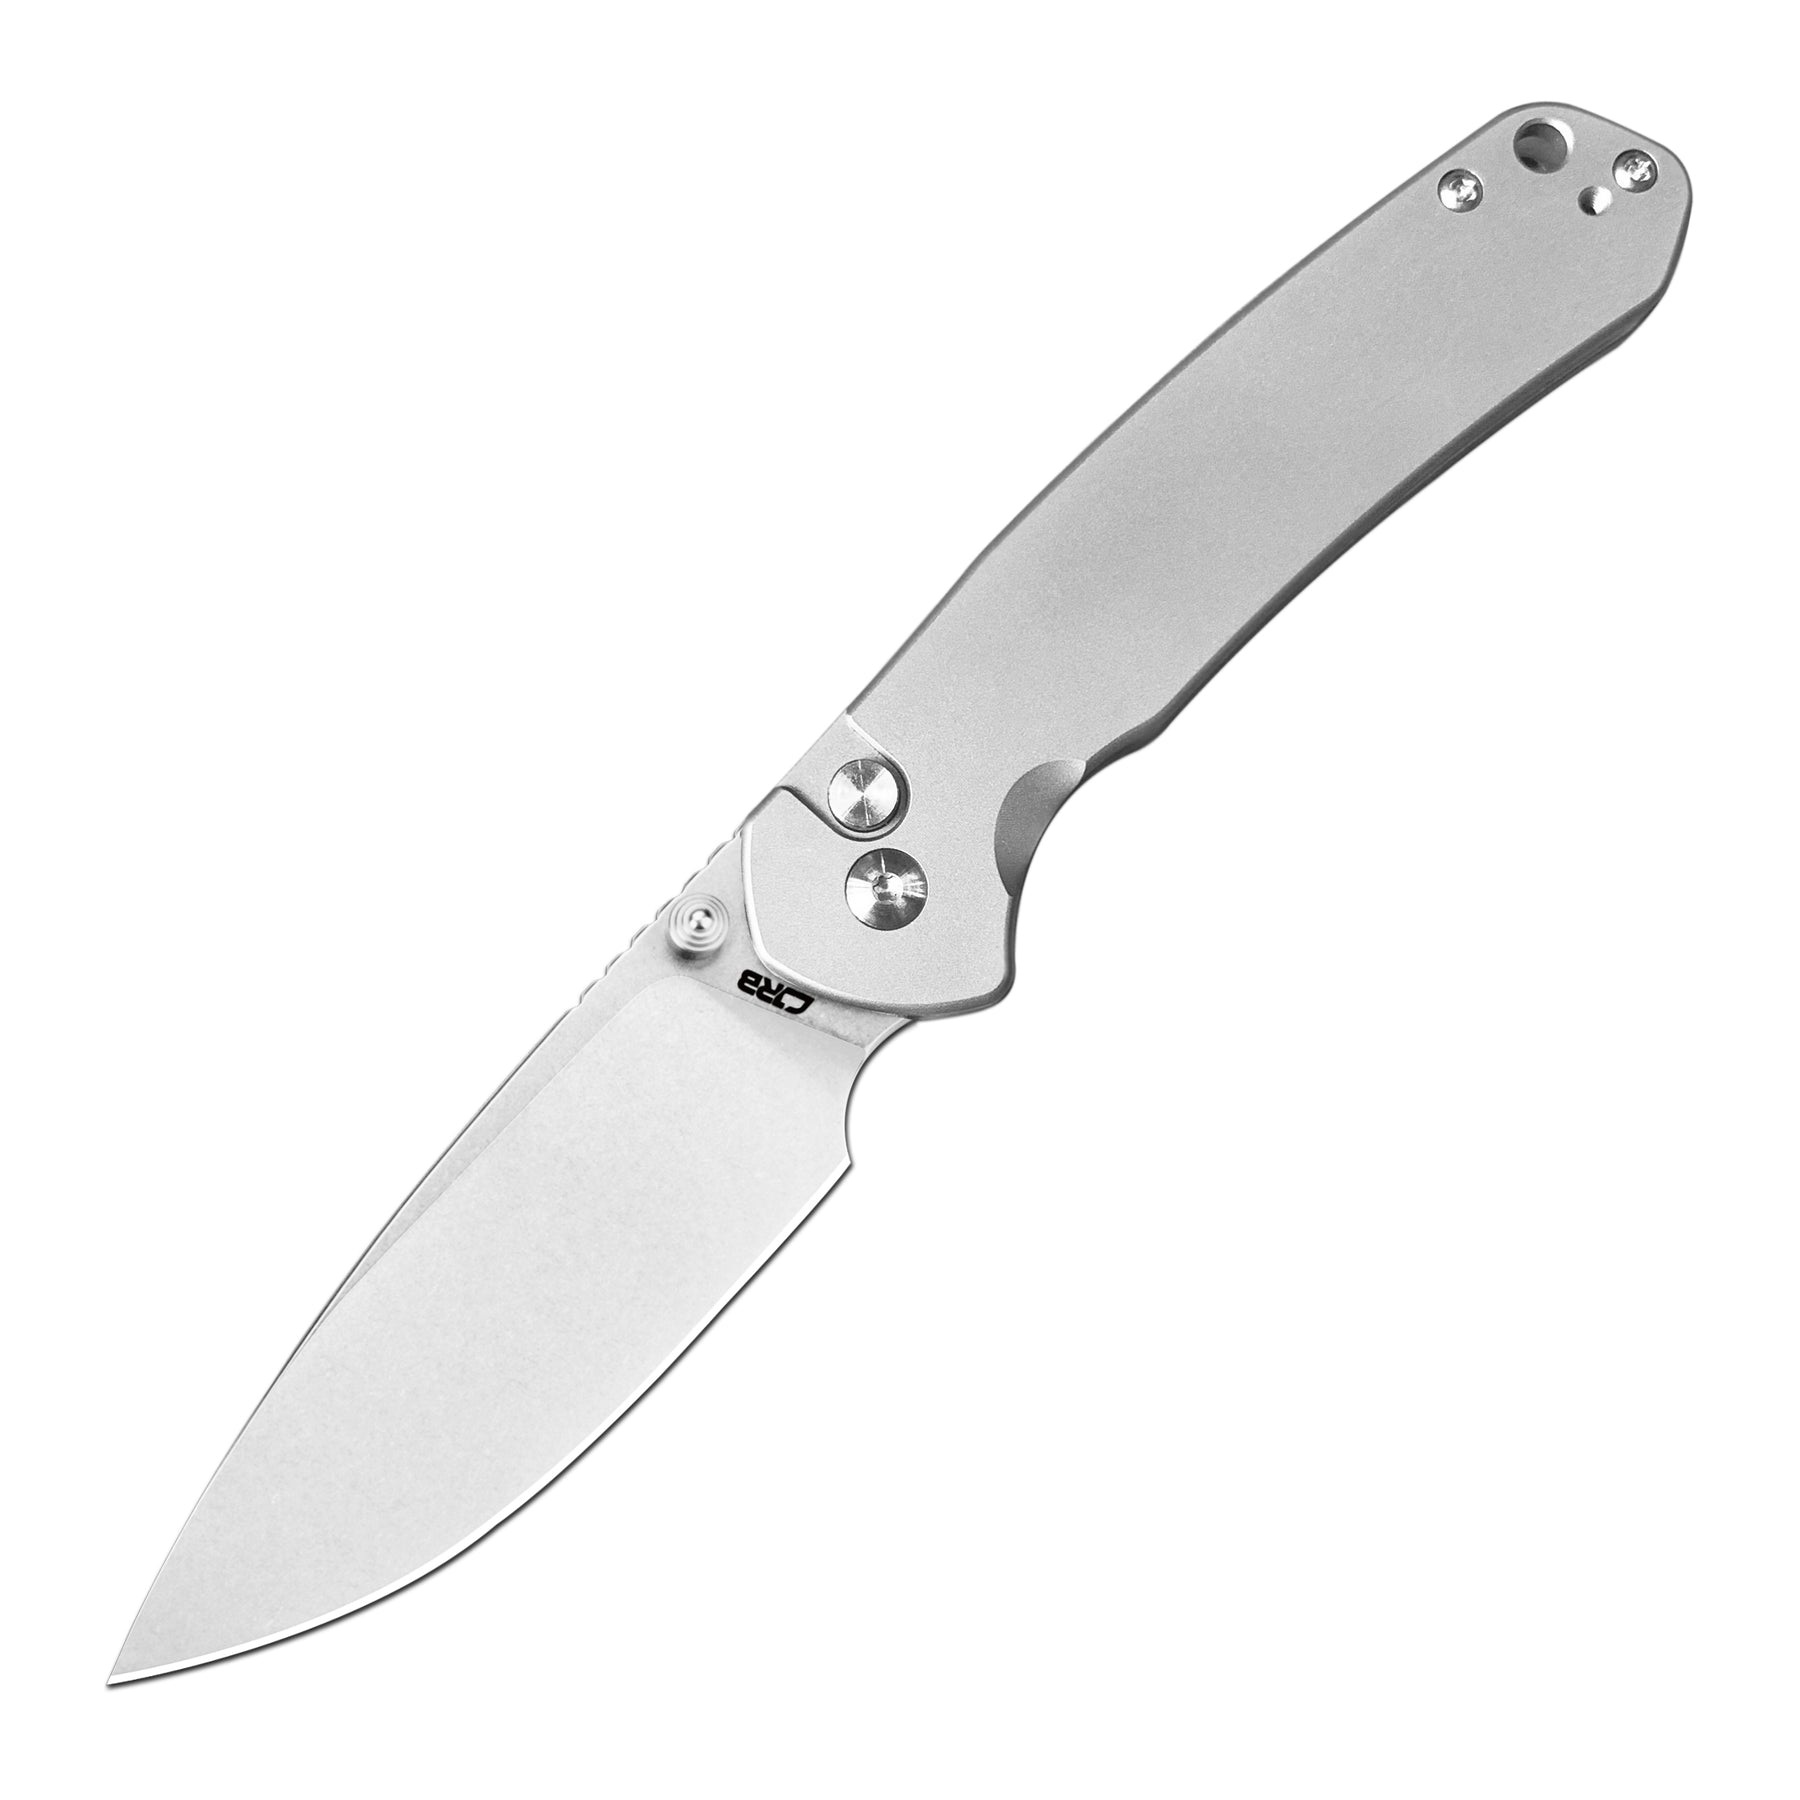 Titanium Pocket Knife Accessories